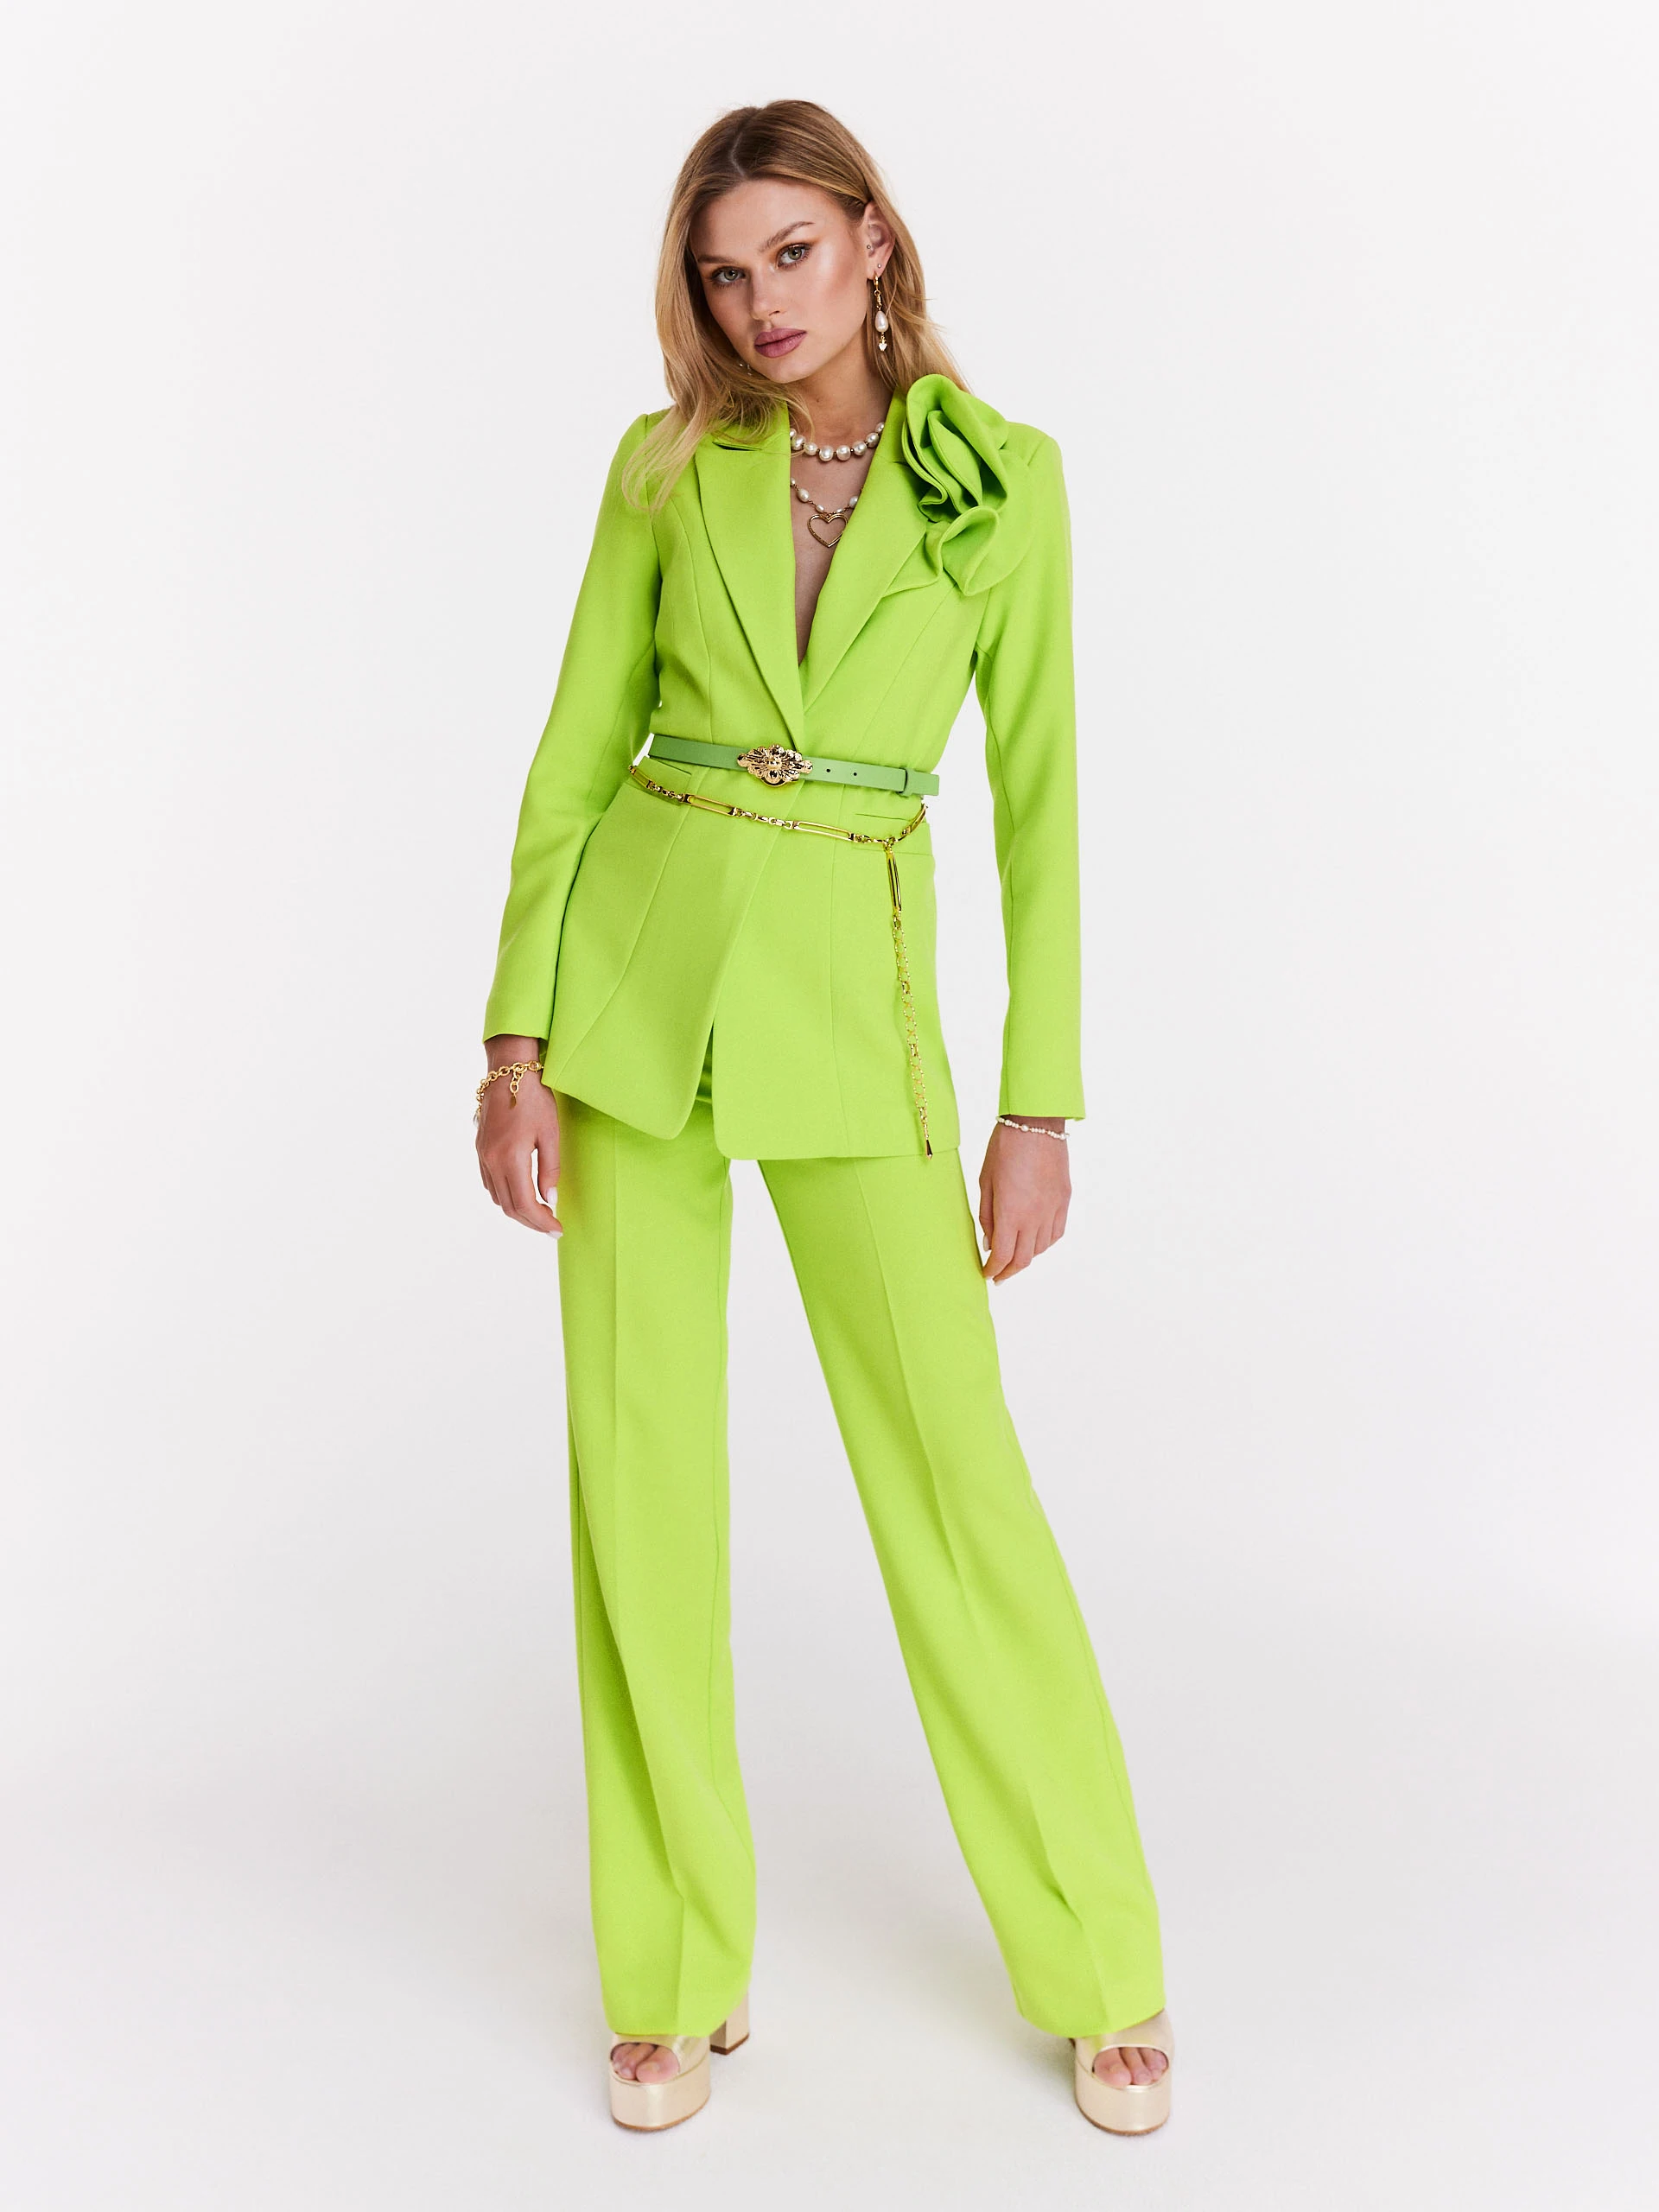 Lime green suit pants